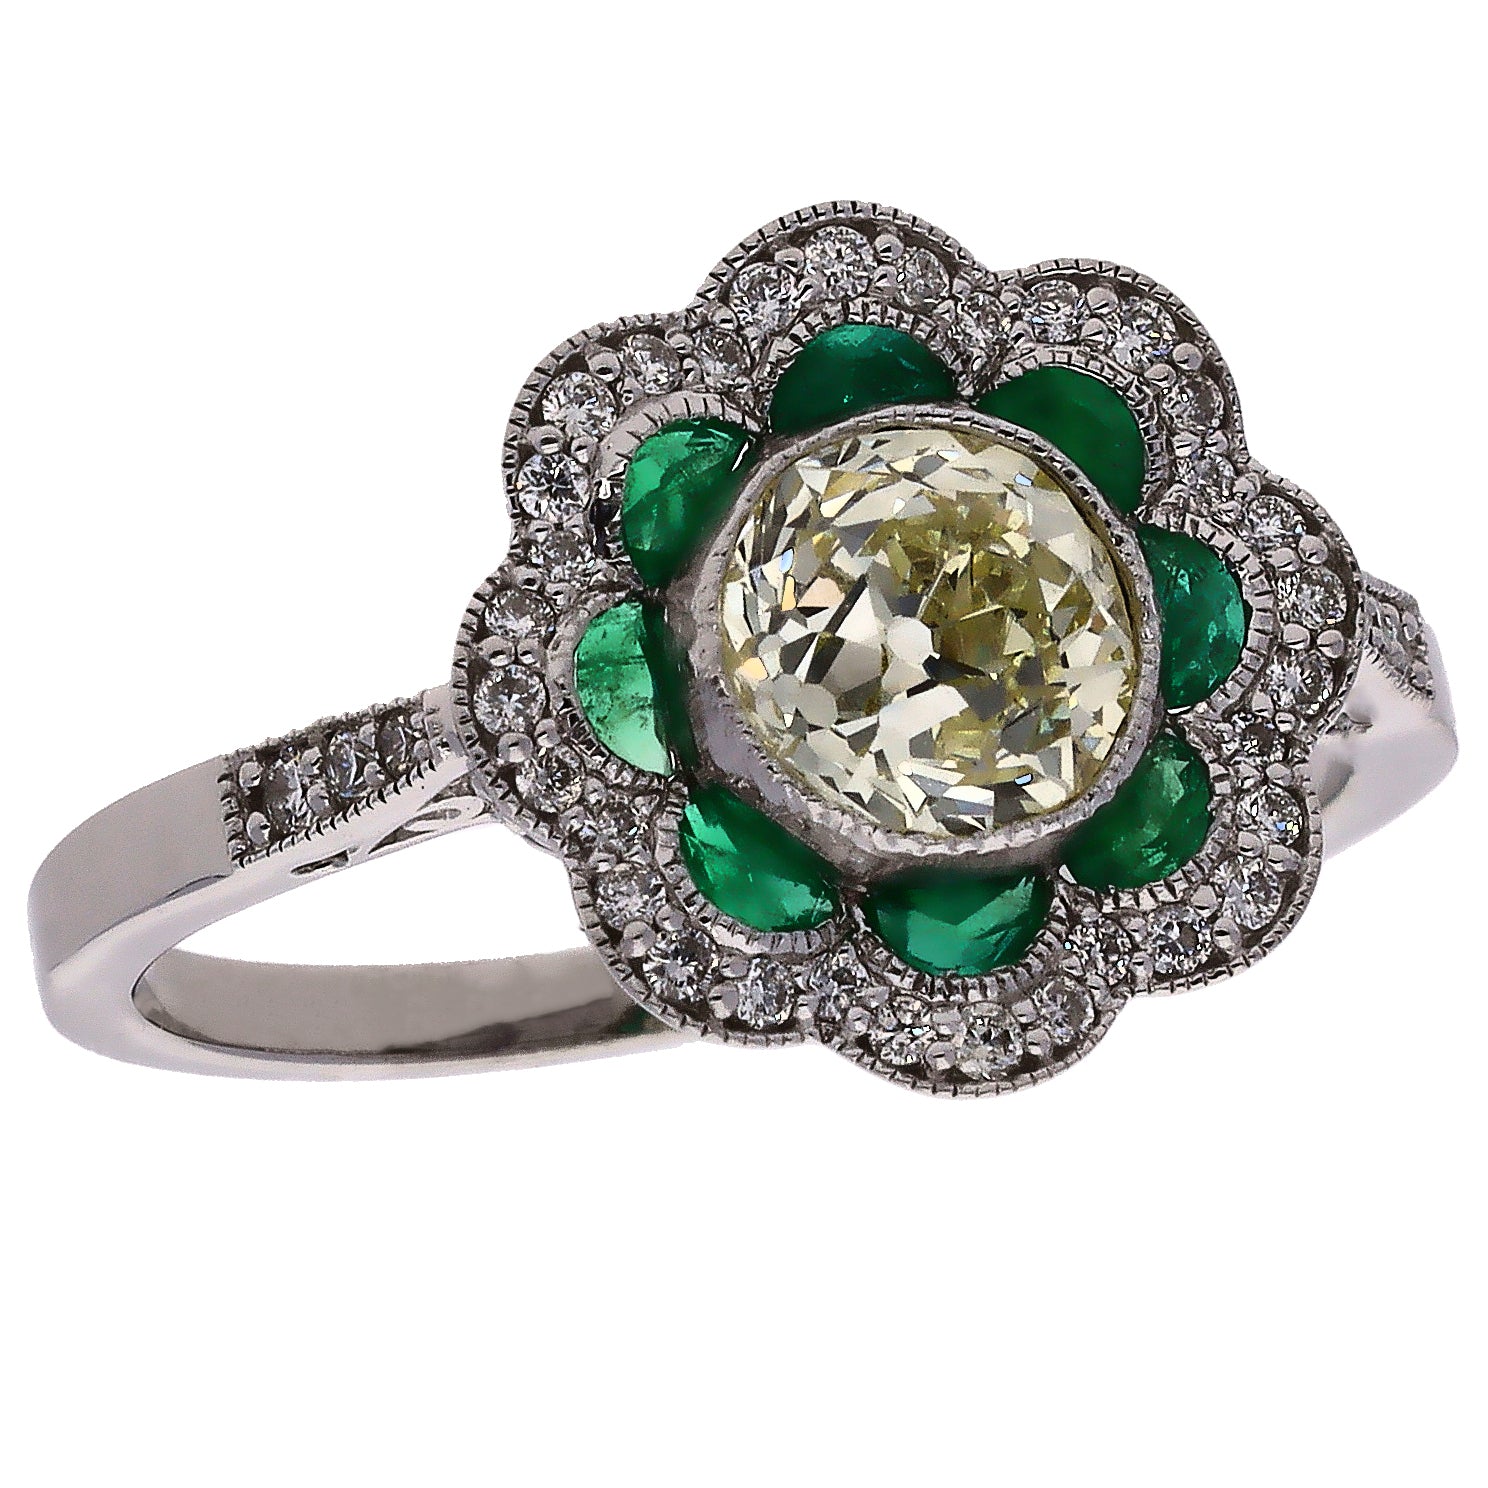 14K White Gold European Cut Diamond and Emerald Fashion Ring